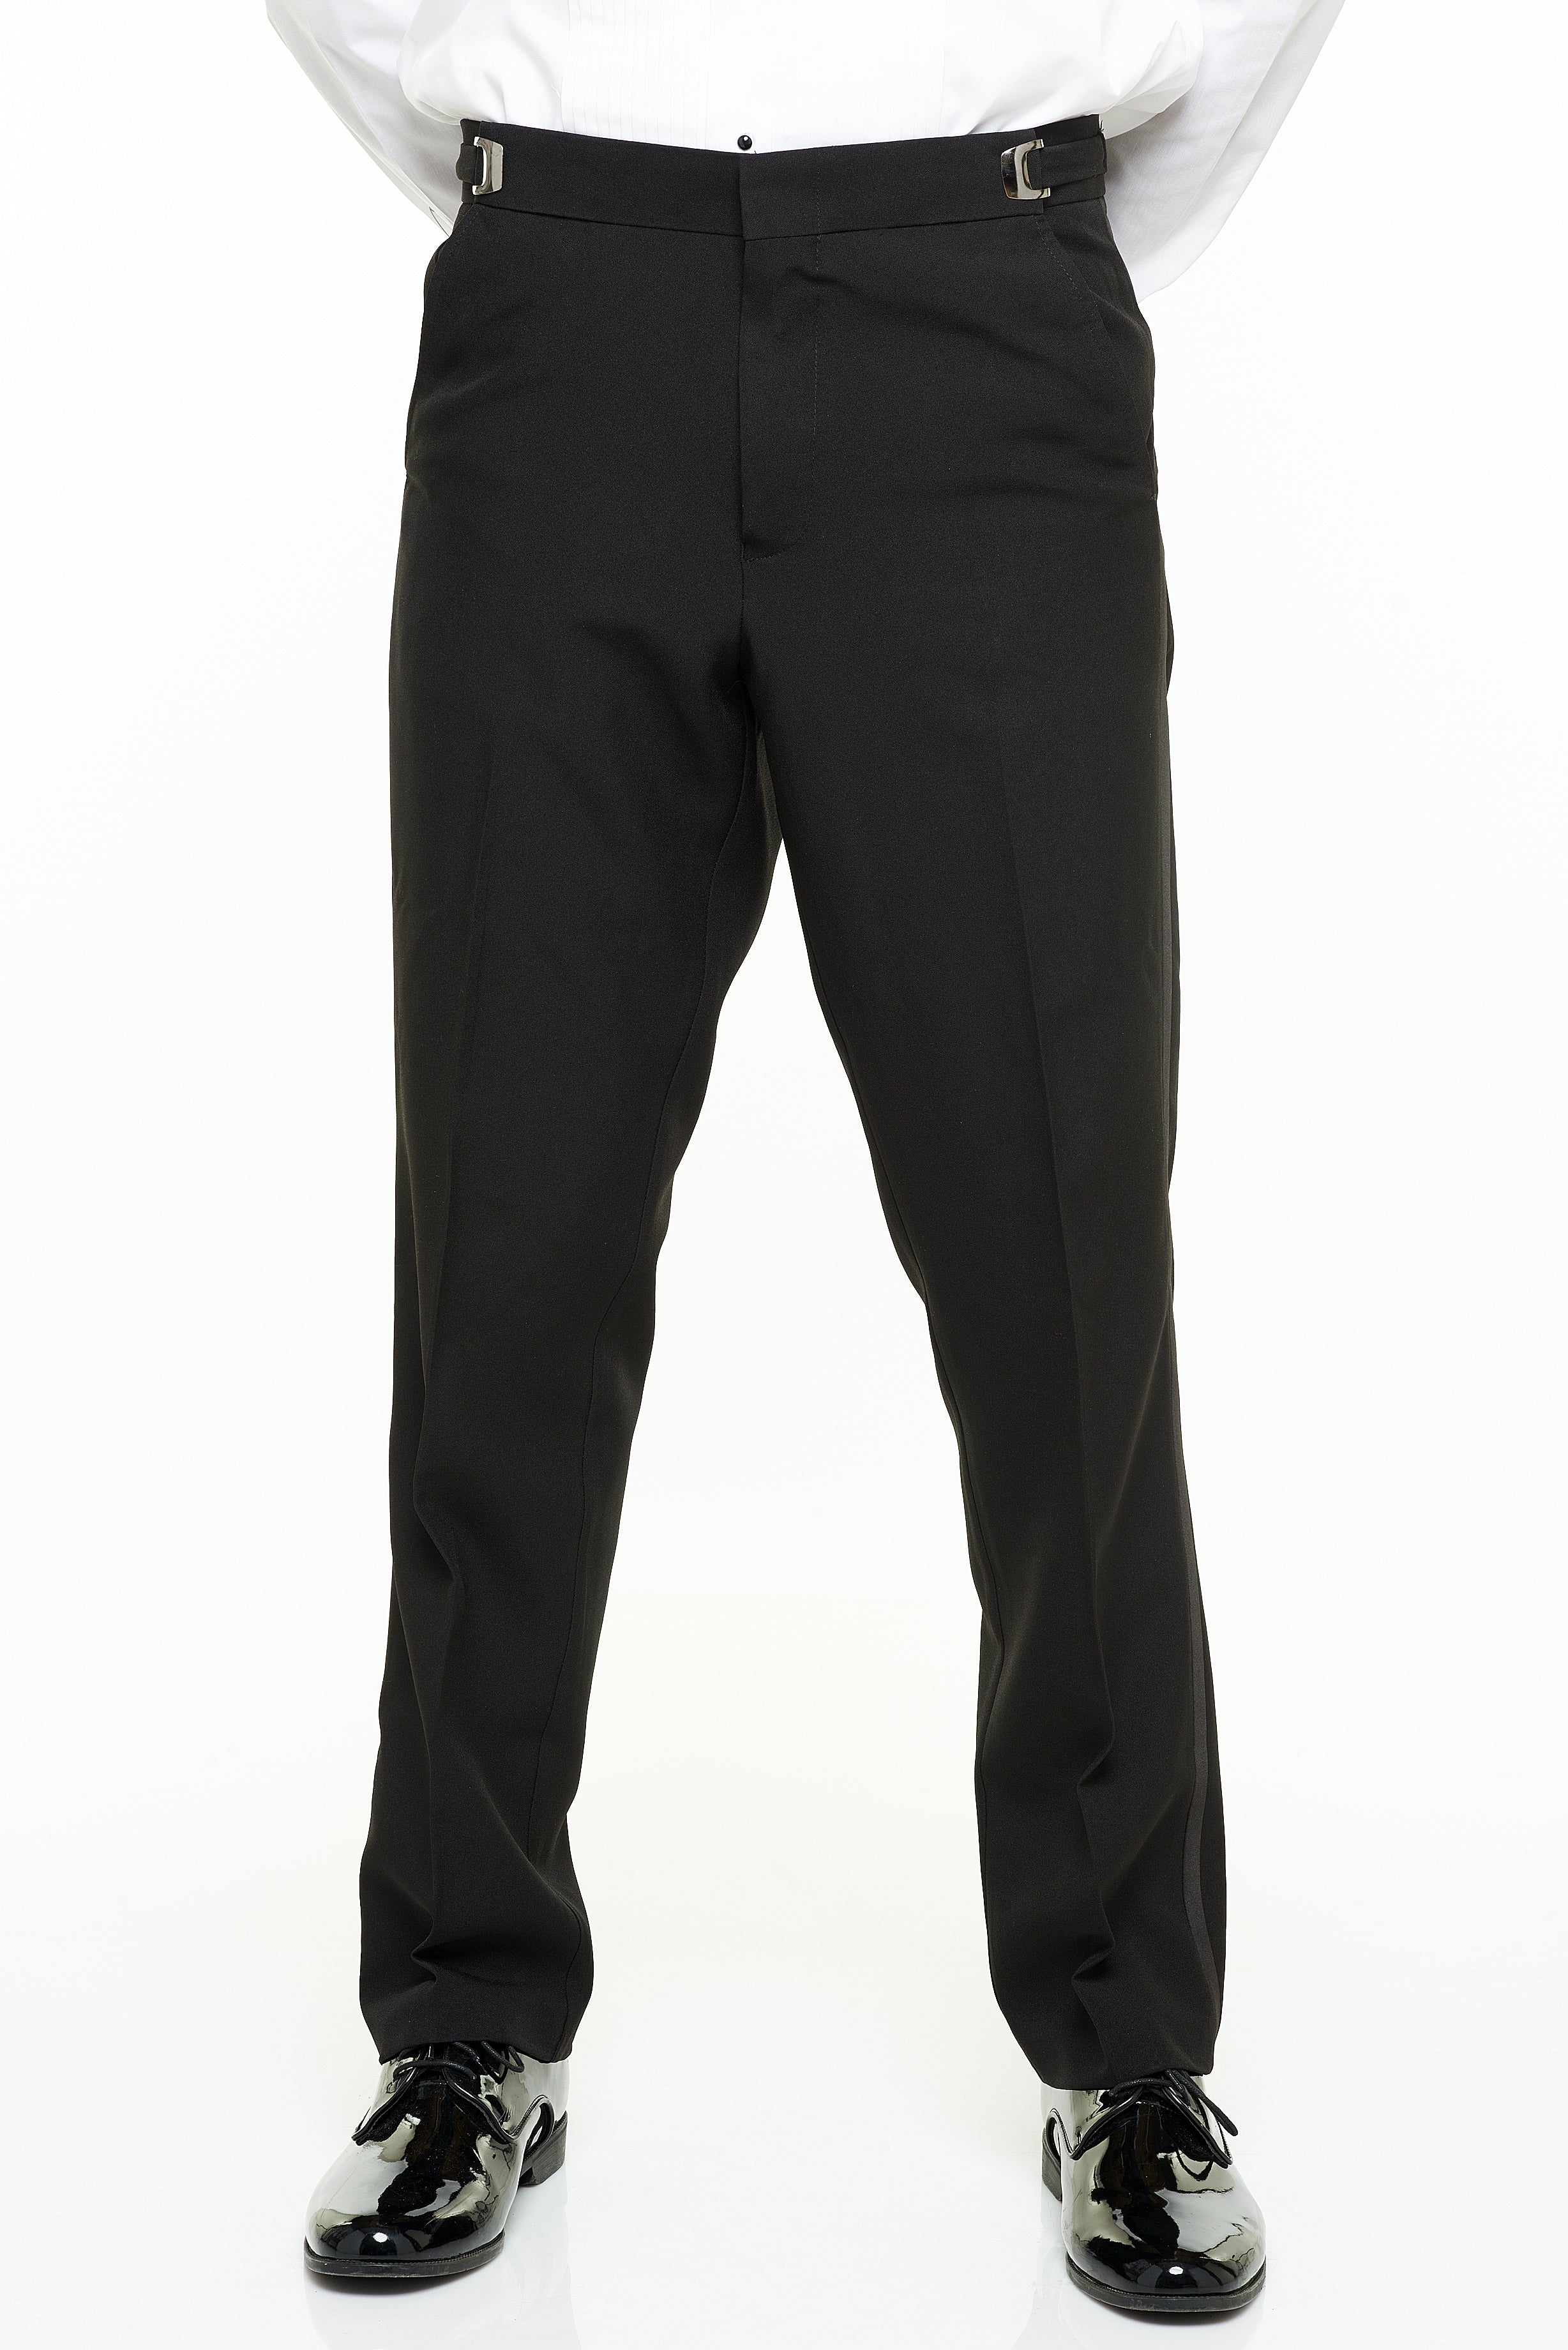 Men's Flat Front Tuxedo Pant Modern Cut - BLACK - 98/2 WOOL/LYCRA SUPE –  Hardwick.com